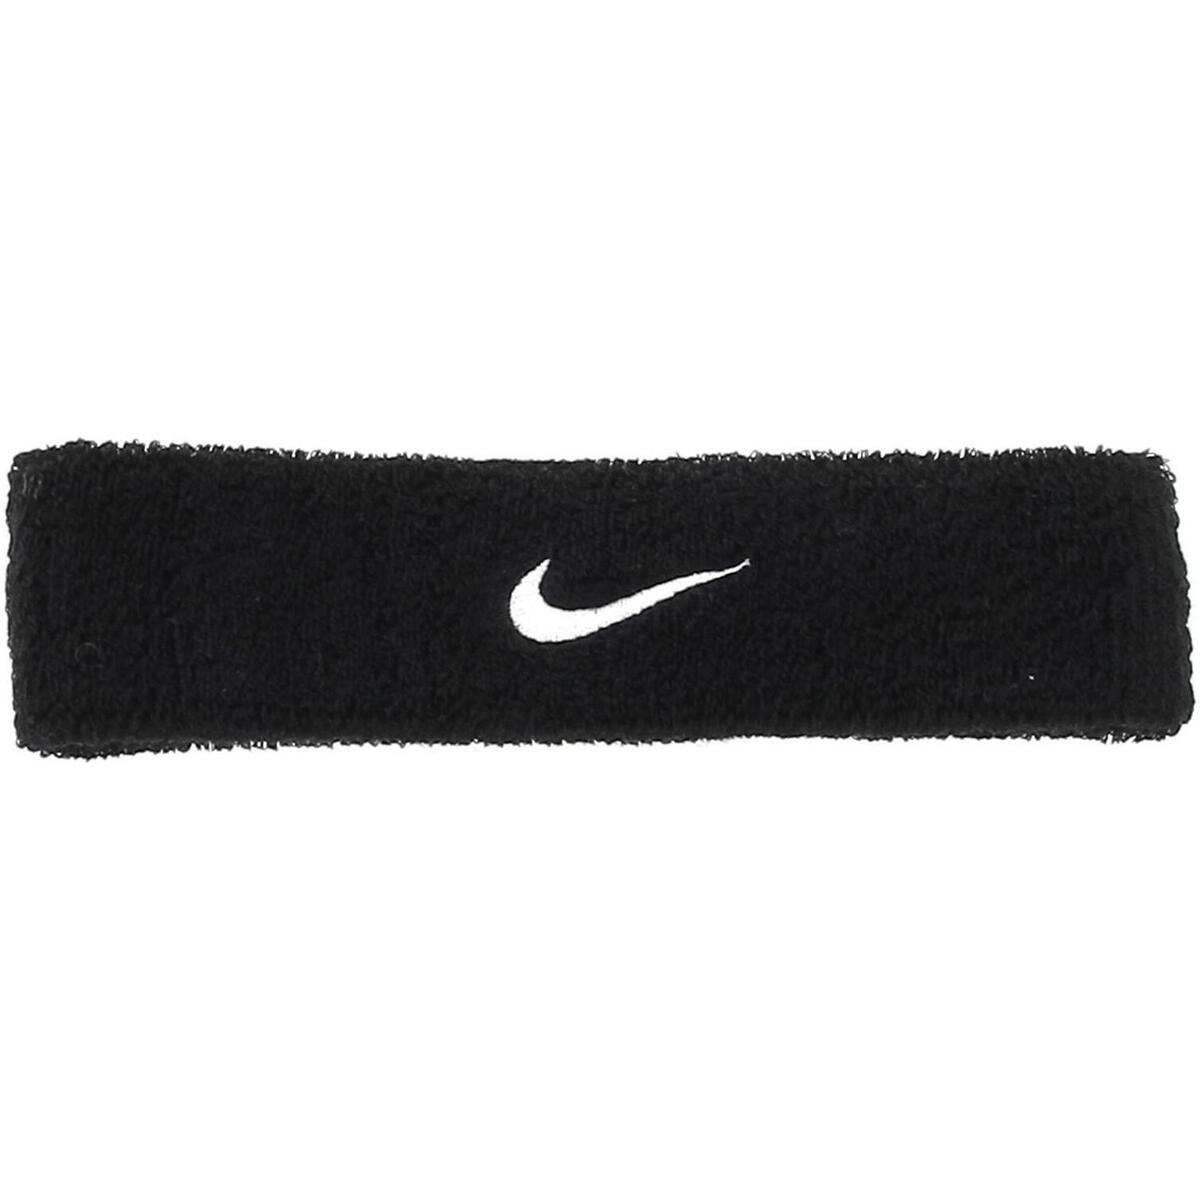 Nike Swoosh headband 25414345 1200 A